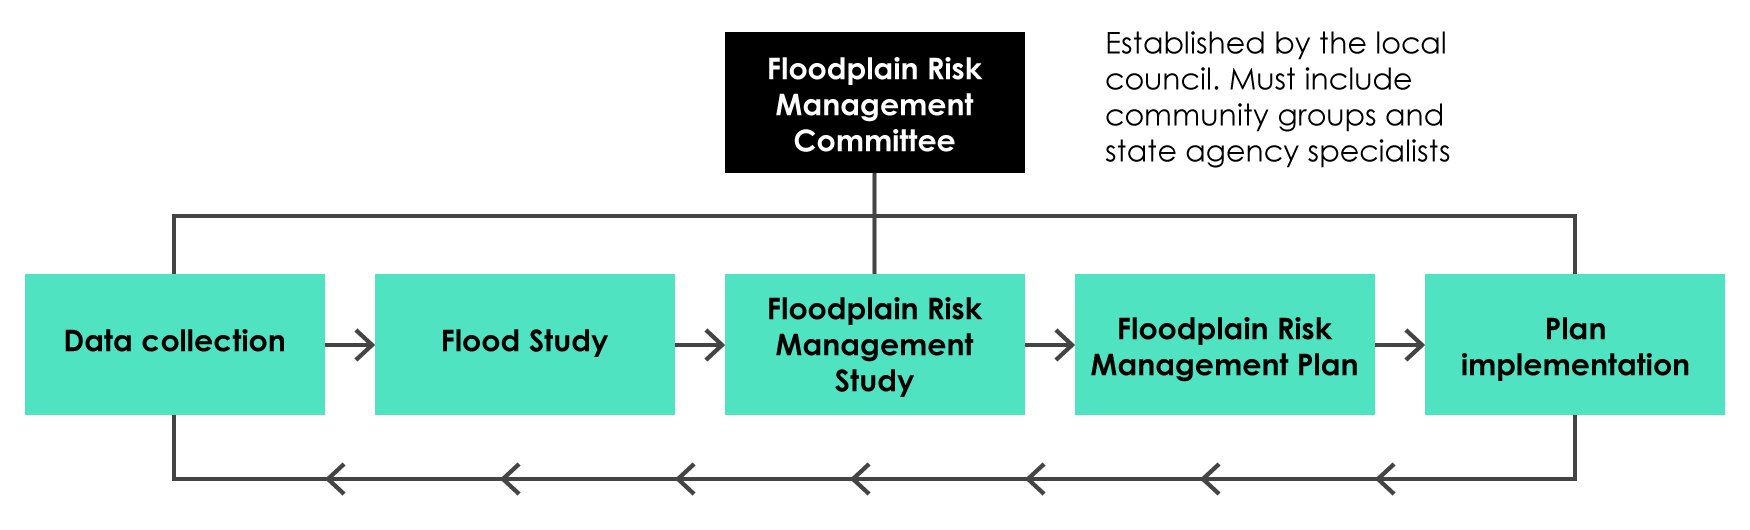 Figure 1: Summary of the floodplain risk management process